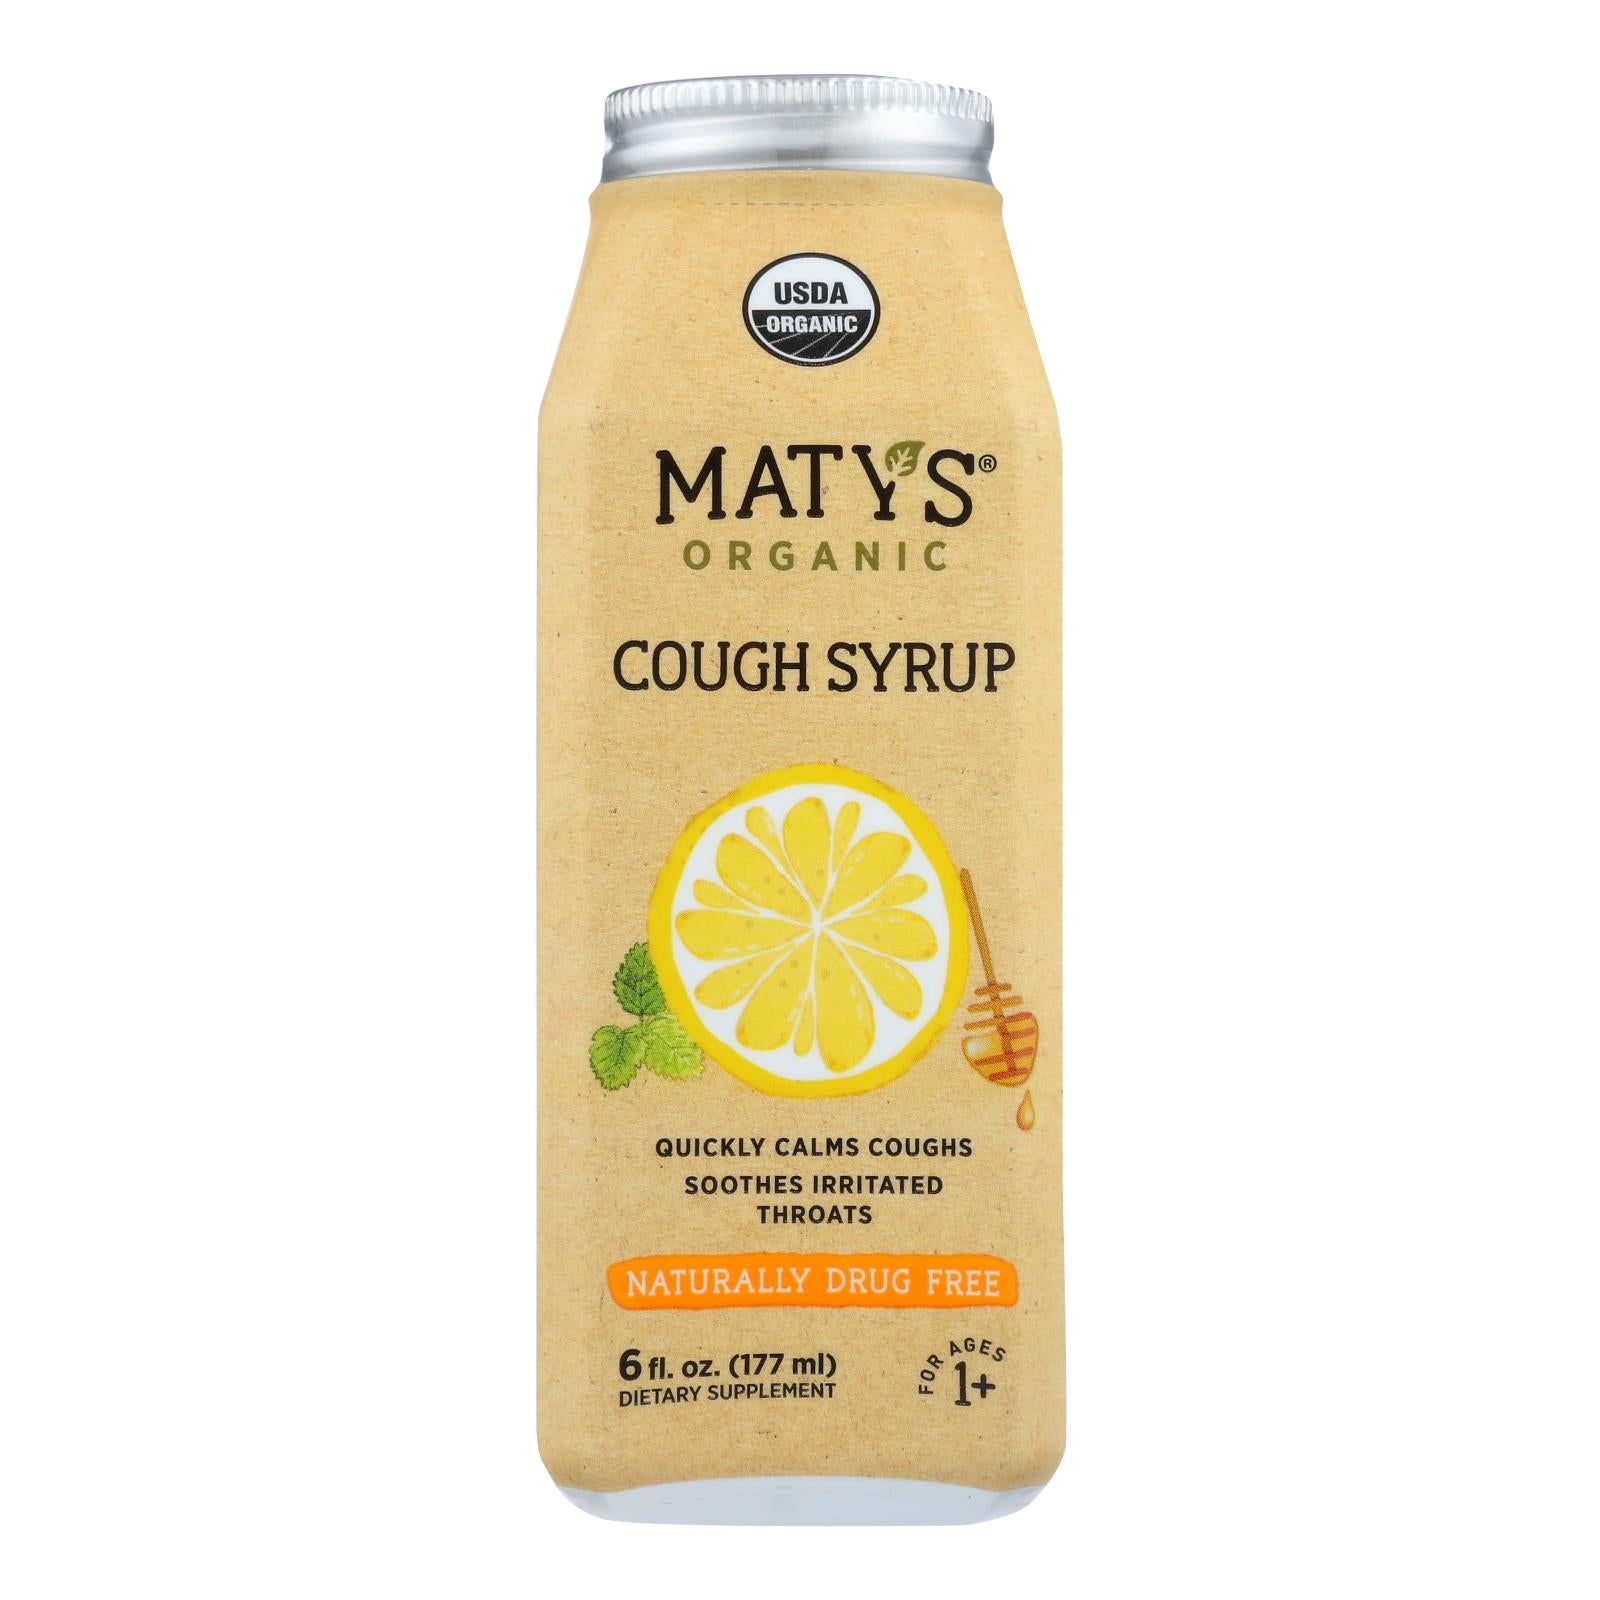 Maty's - Cough Syrup Organic - 6 fl oz.